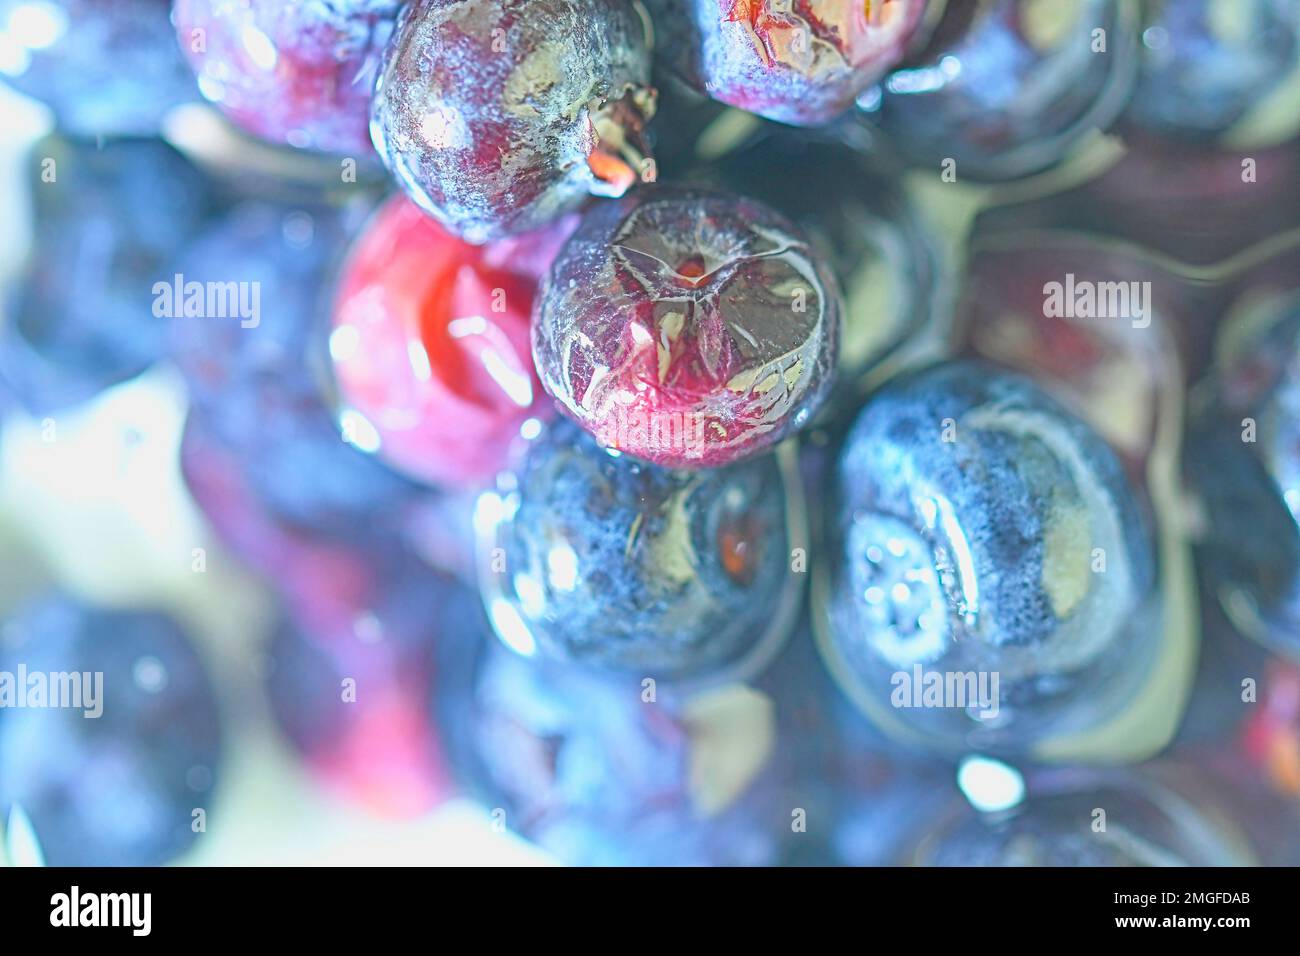 Bilberries wallpaper. Close-up of blueberries background. Shallow DOF. Defocused. Horizonatal macro image. Stock Photo